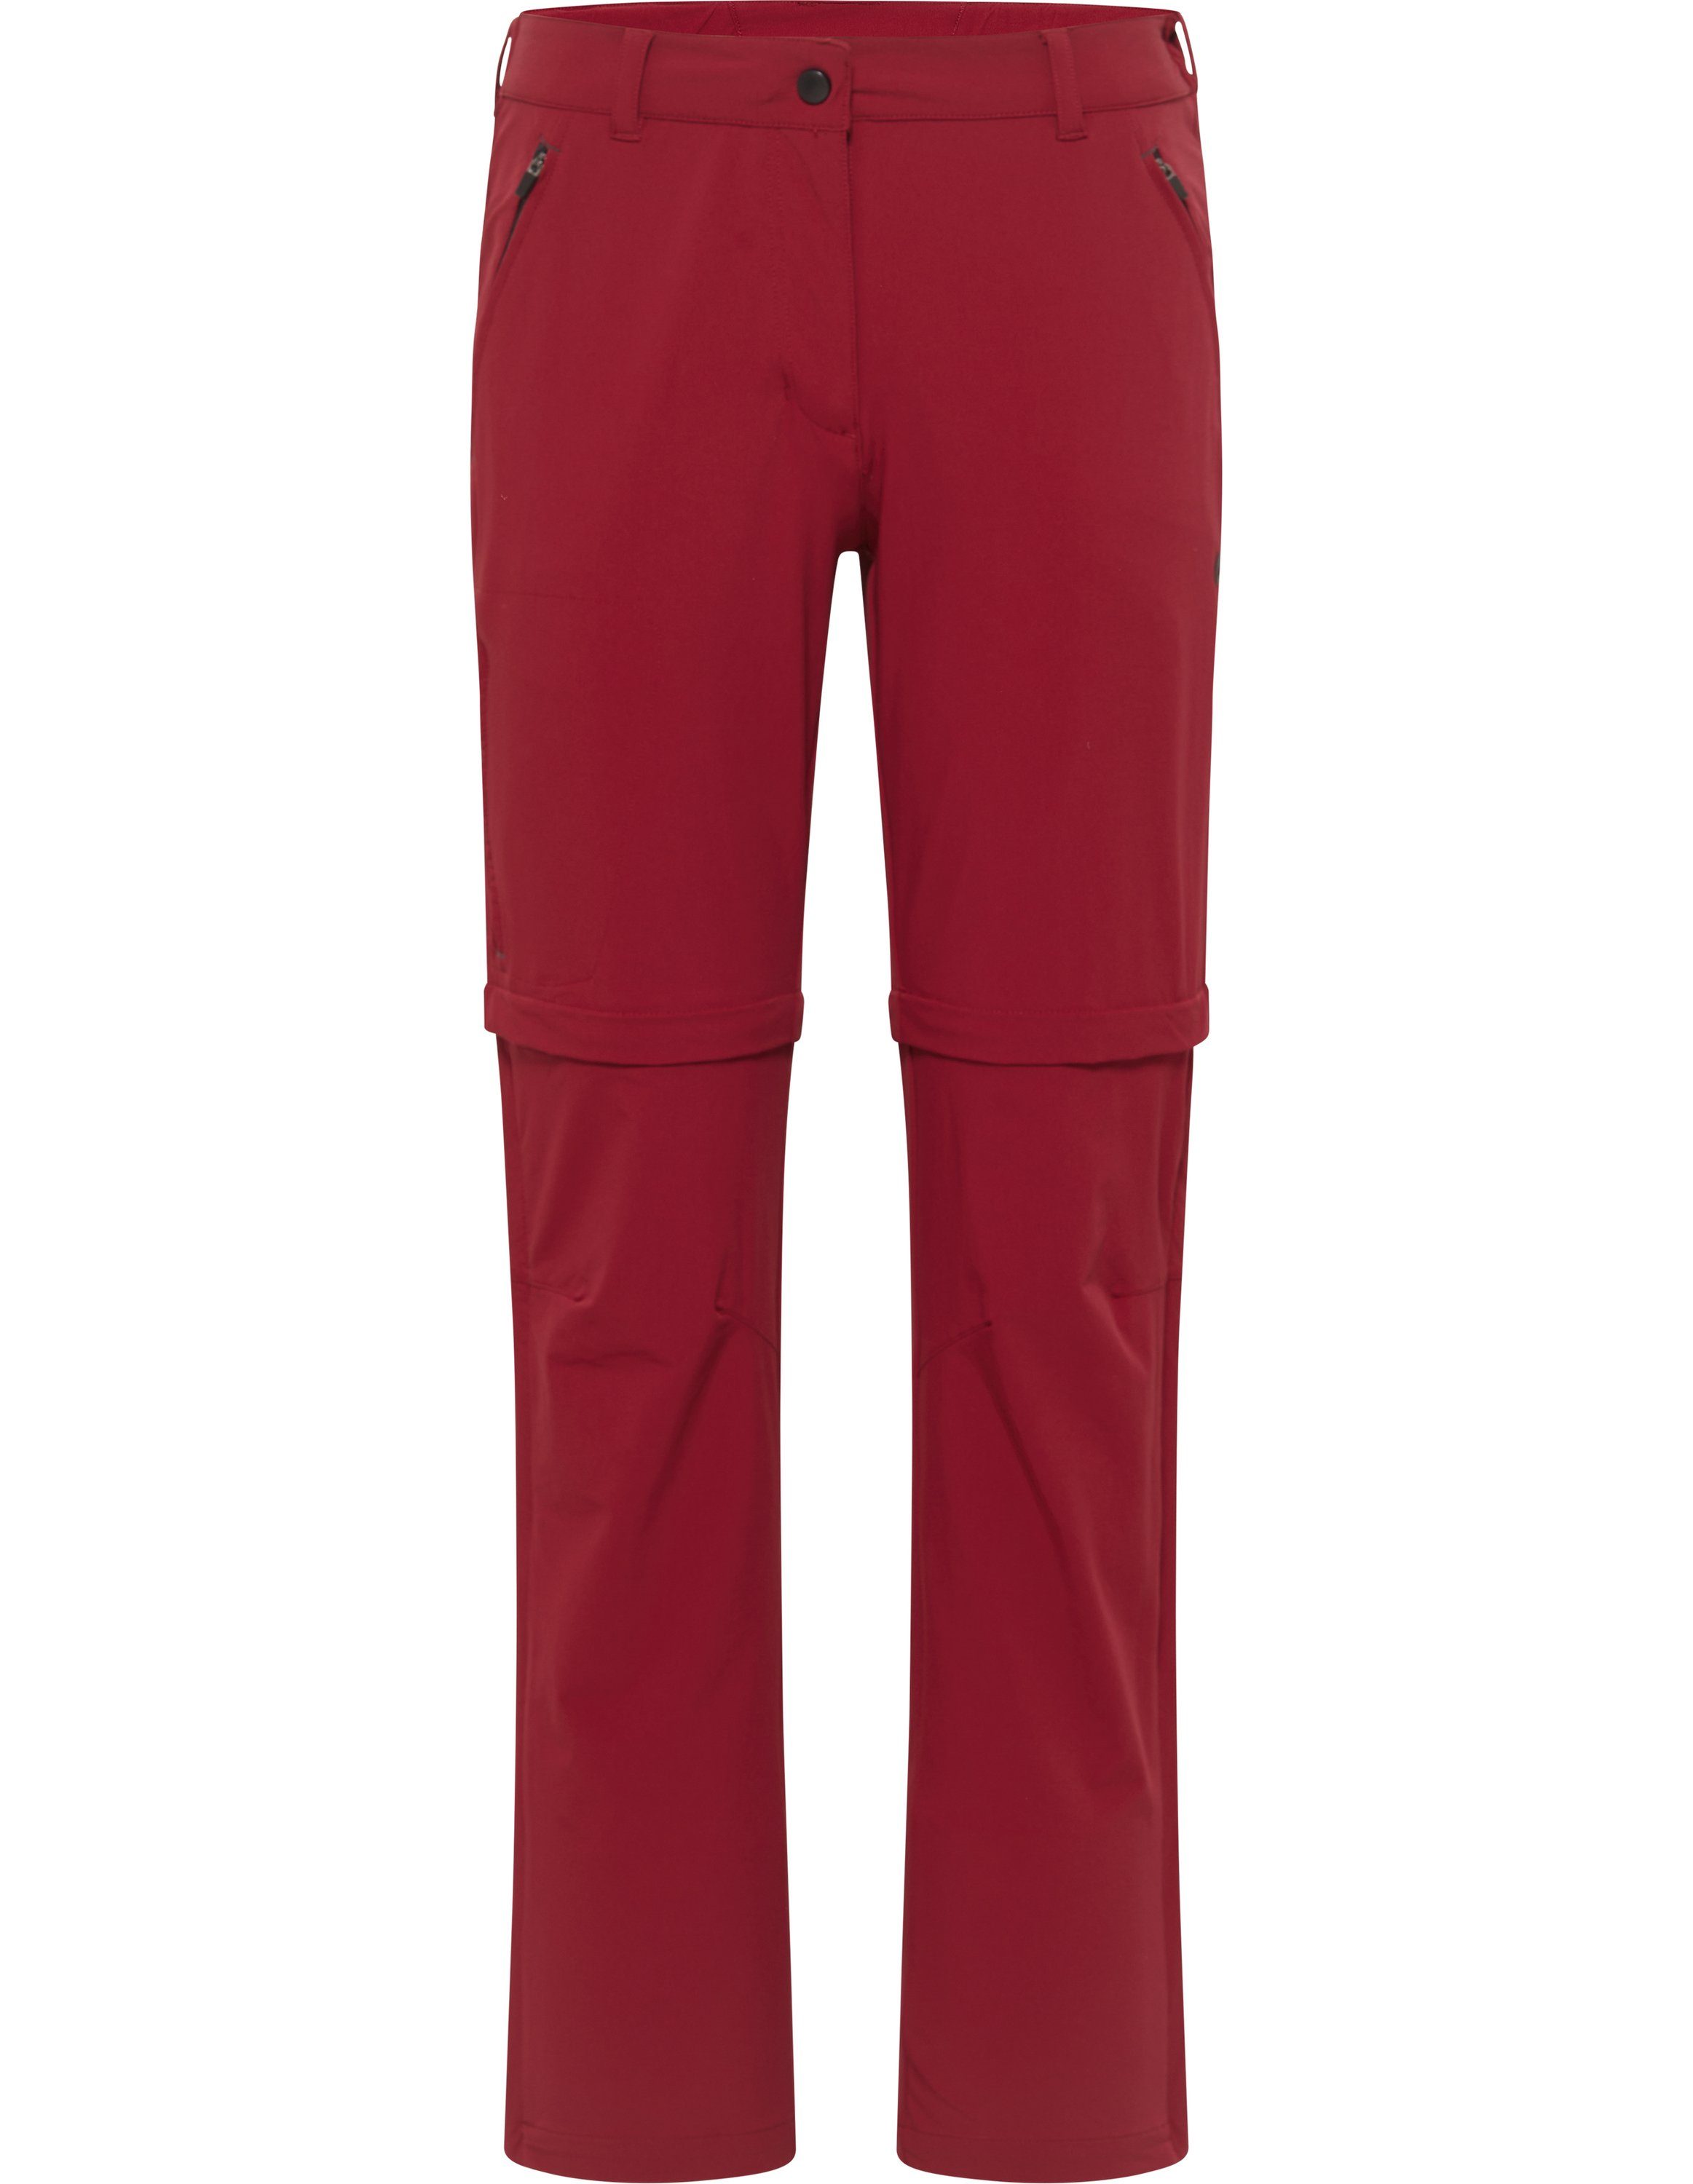 Hose red Hot-Sportswear Sporthose Tofino crimson